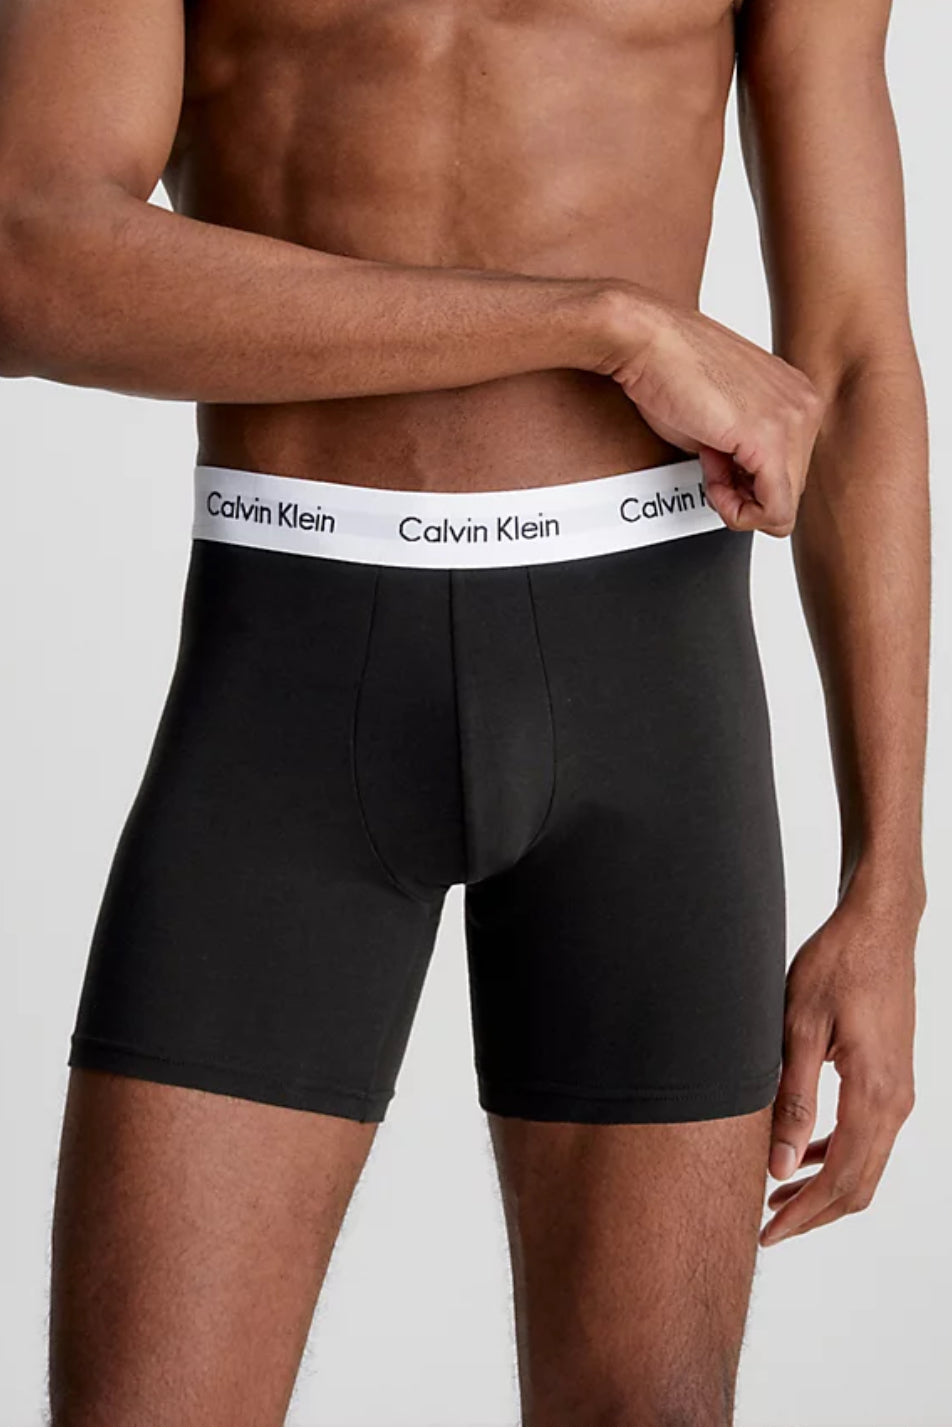 Calvin Klein 3 Pack Boxer Briefs | Save 20% on Subscription | Pants & Socks